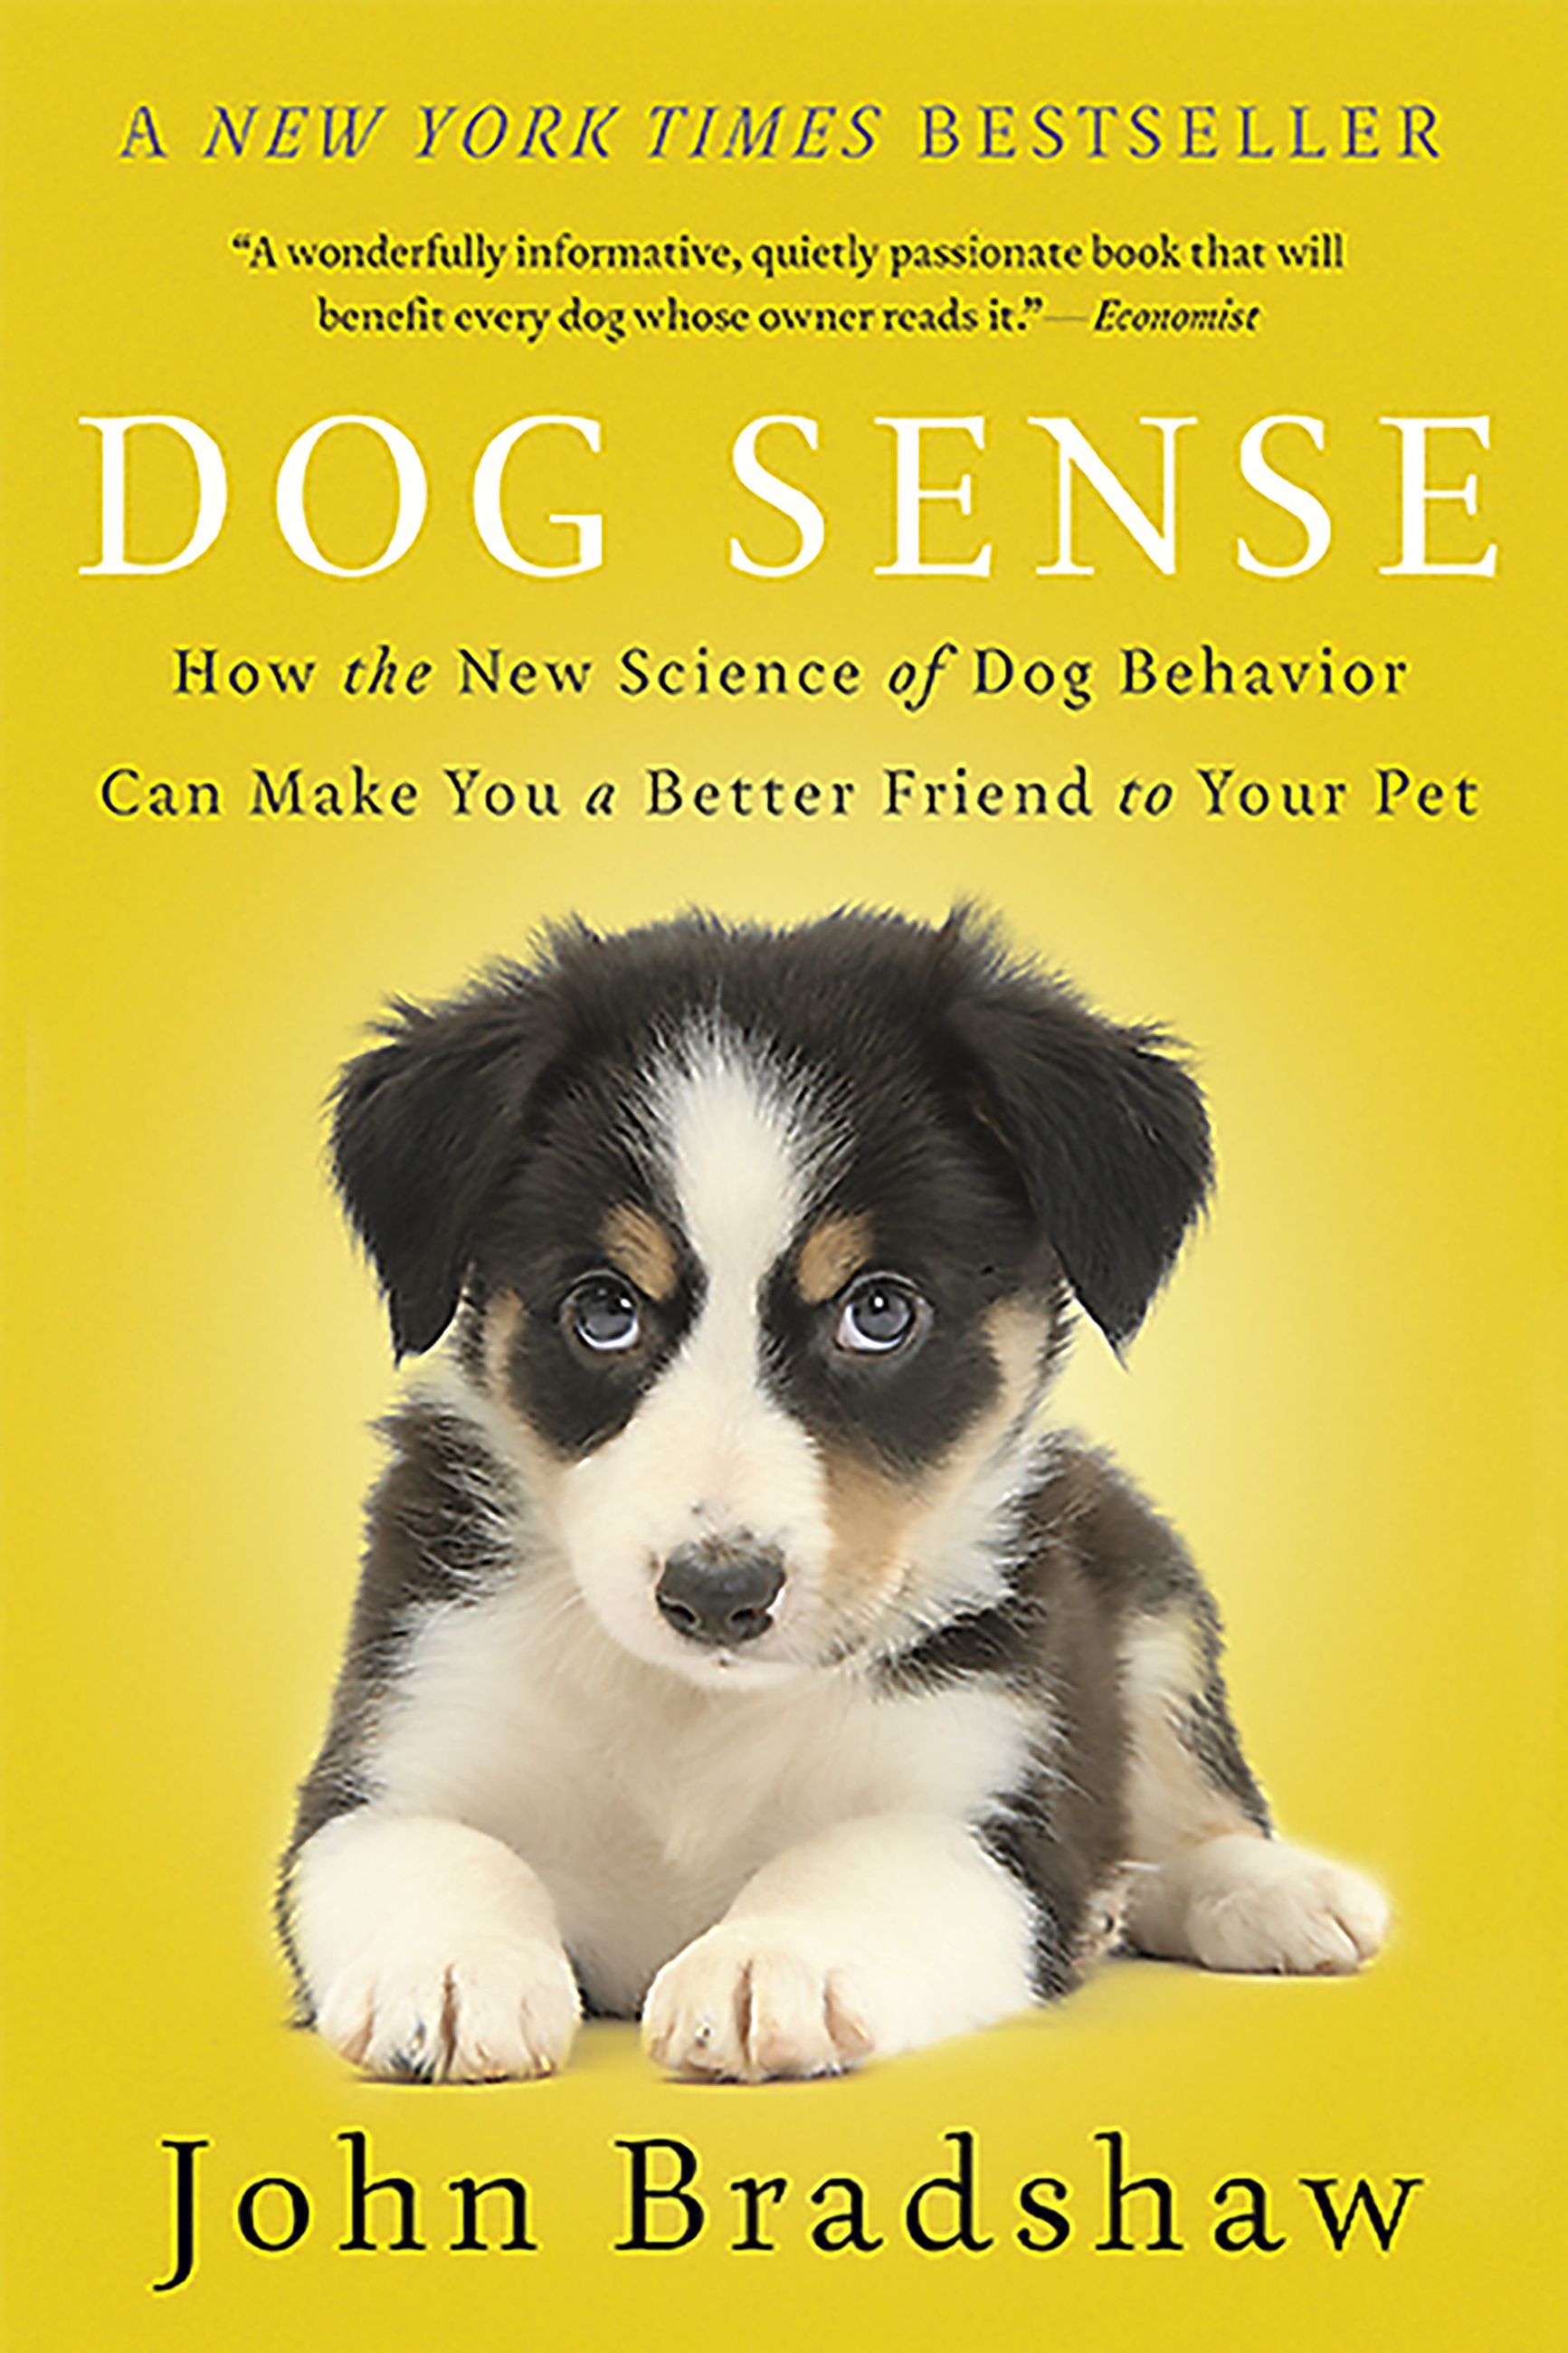 Dog Sense by John Bradshaw | Basic Books